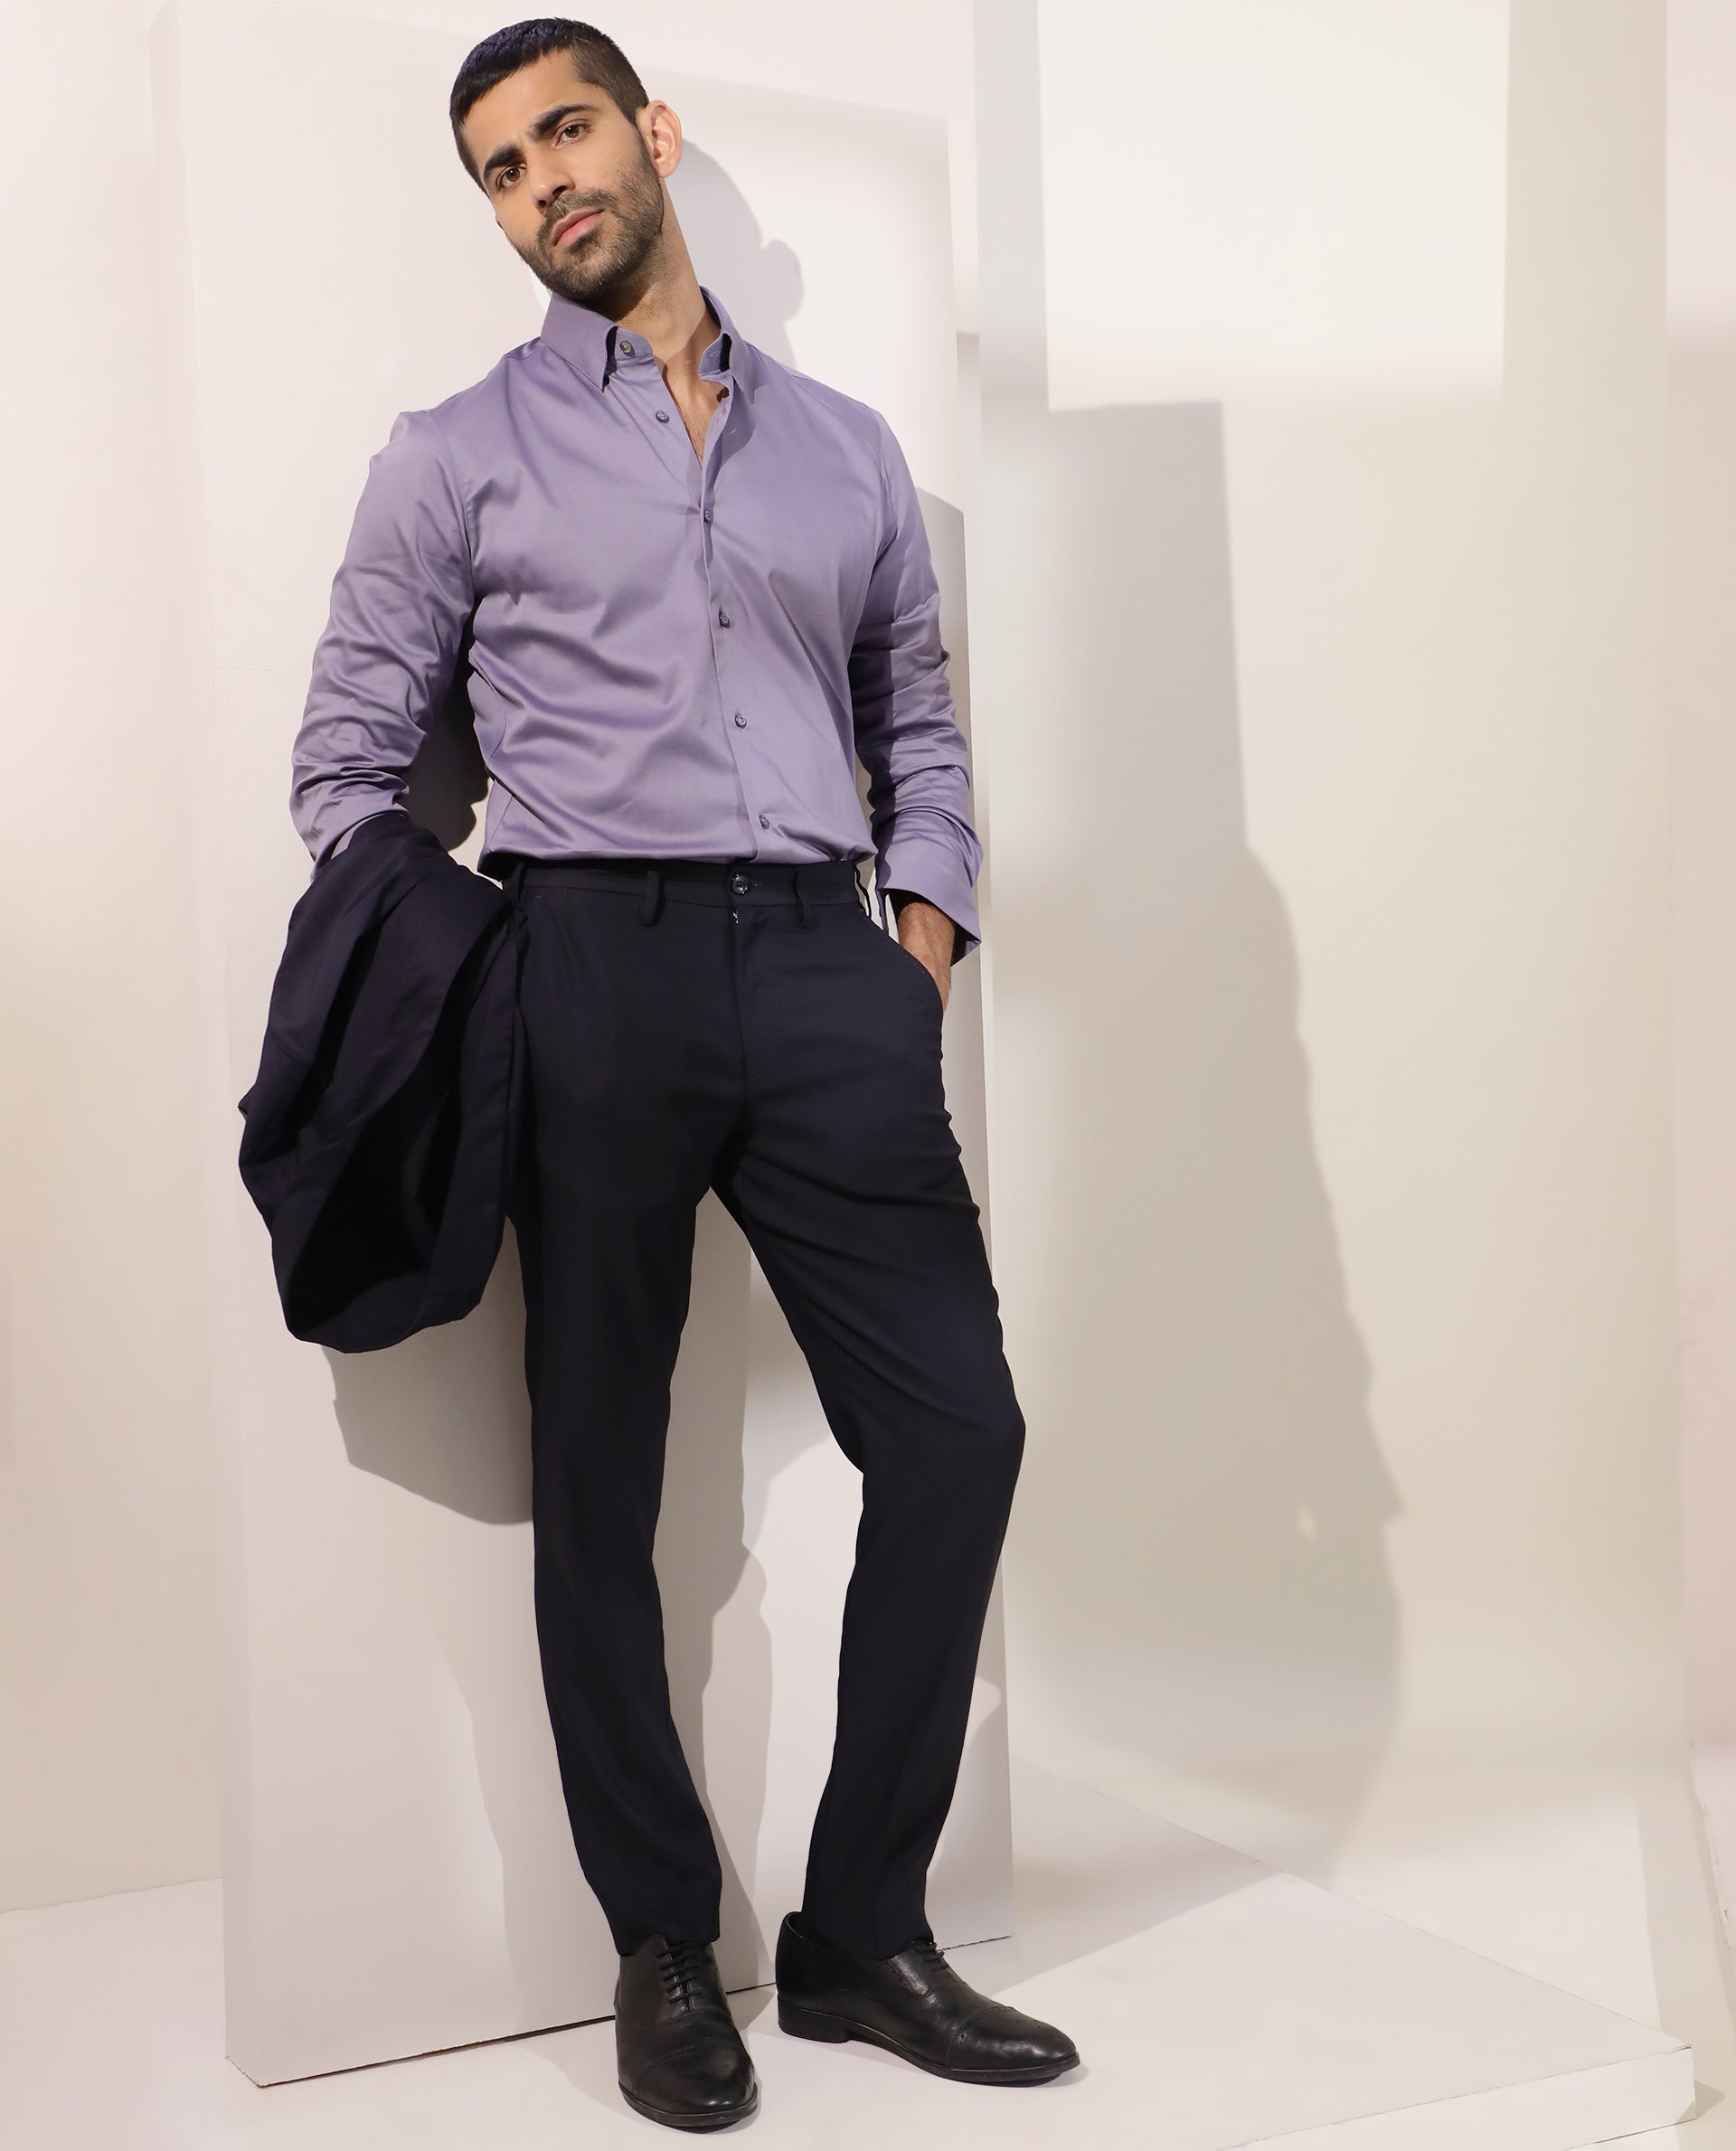 Dressing Purple Shirt Gray Pants Black Stock Photo 175219091 | Shutterstock